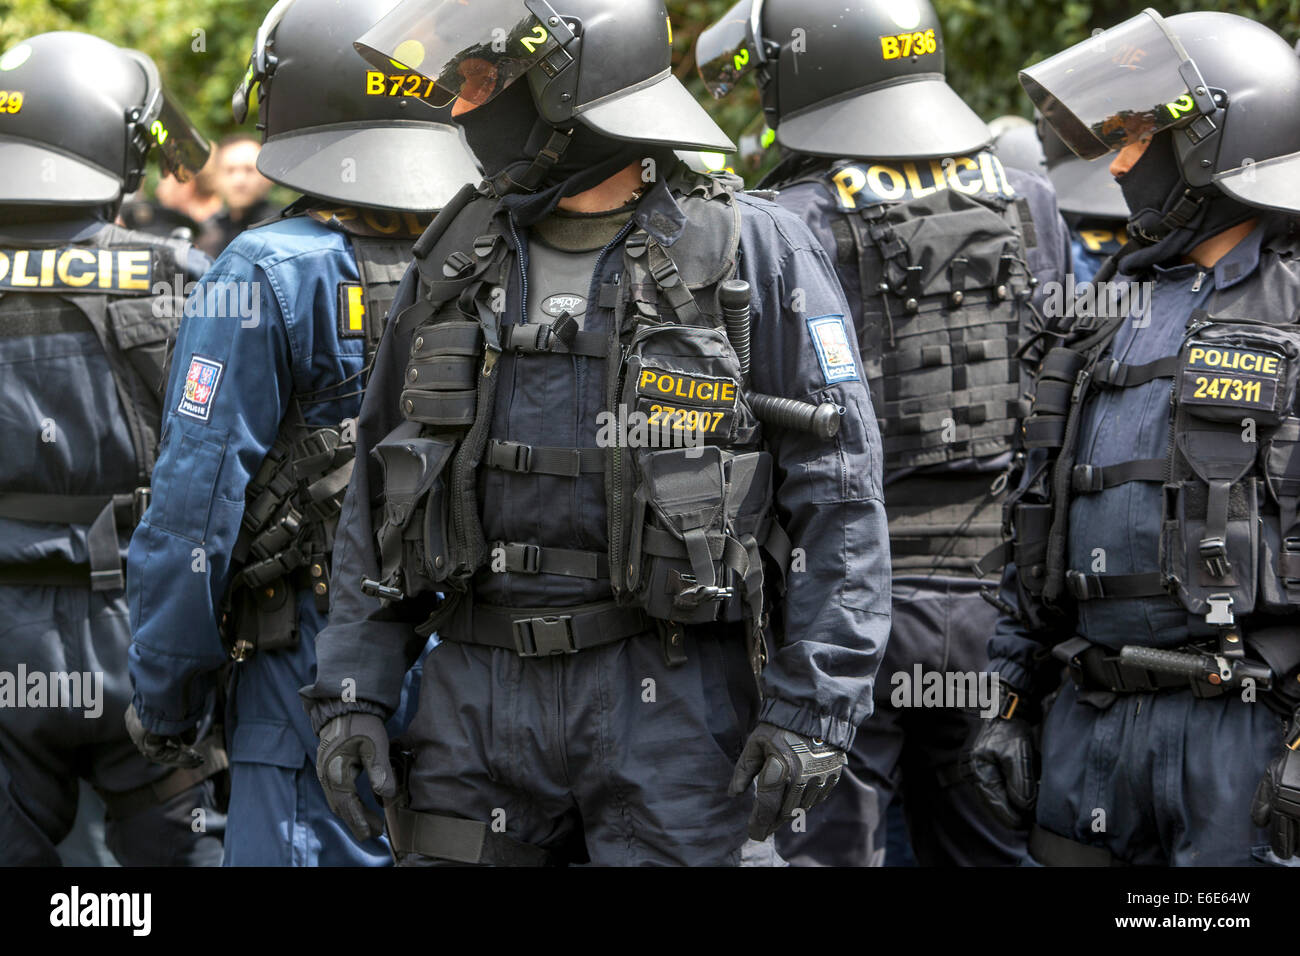 Czech police intervention unit in uniform Stock Photo